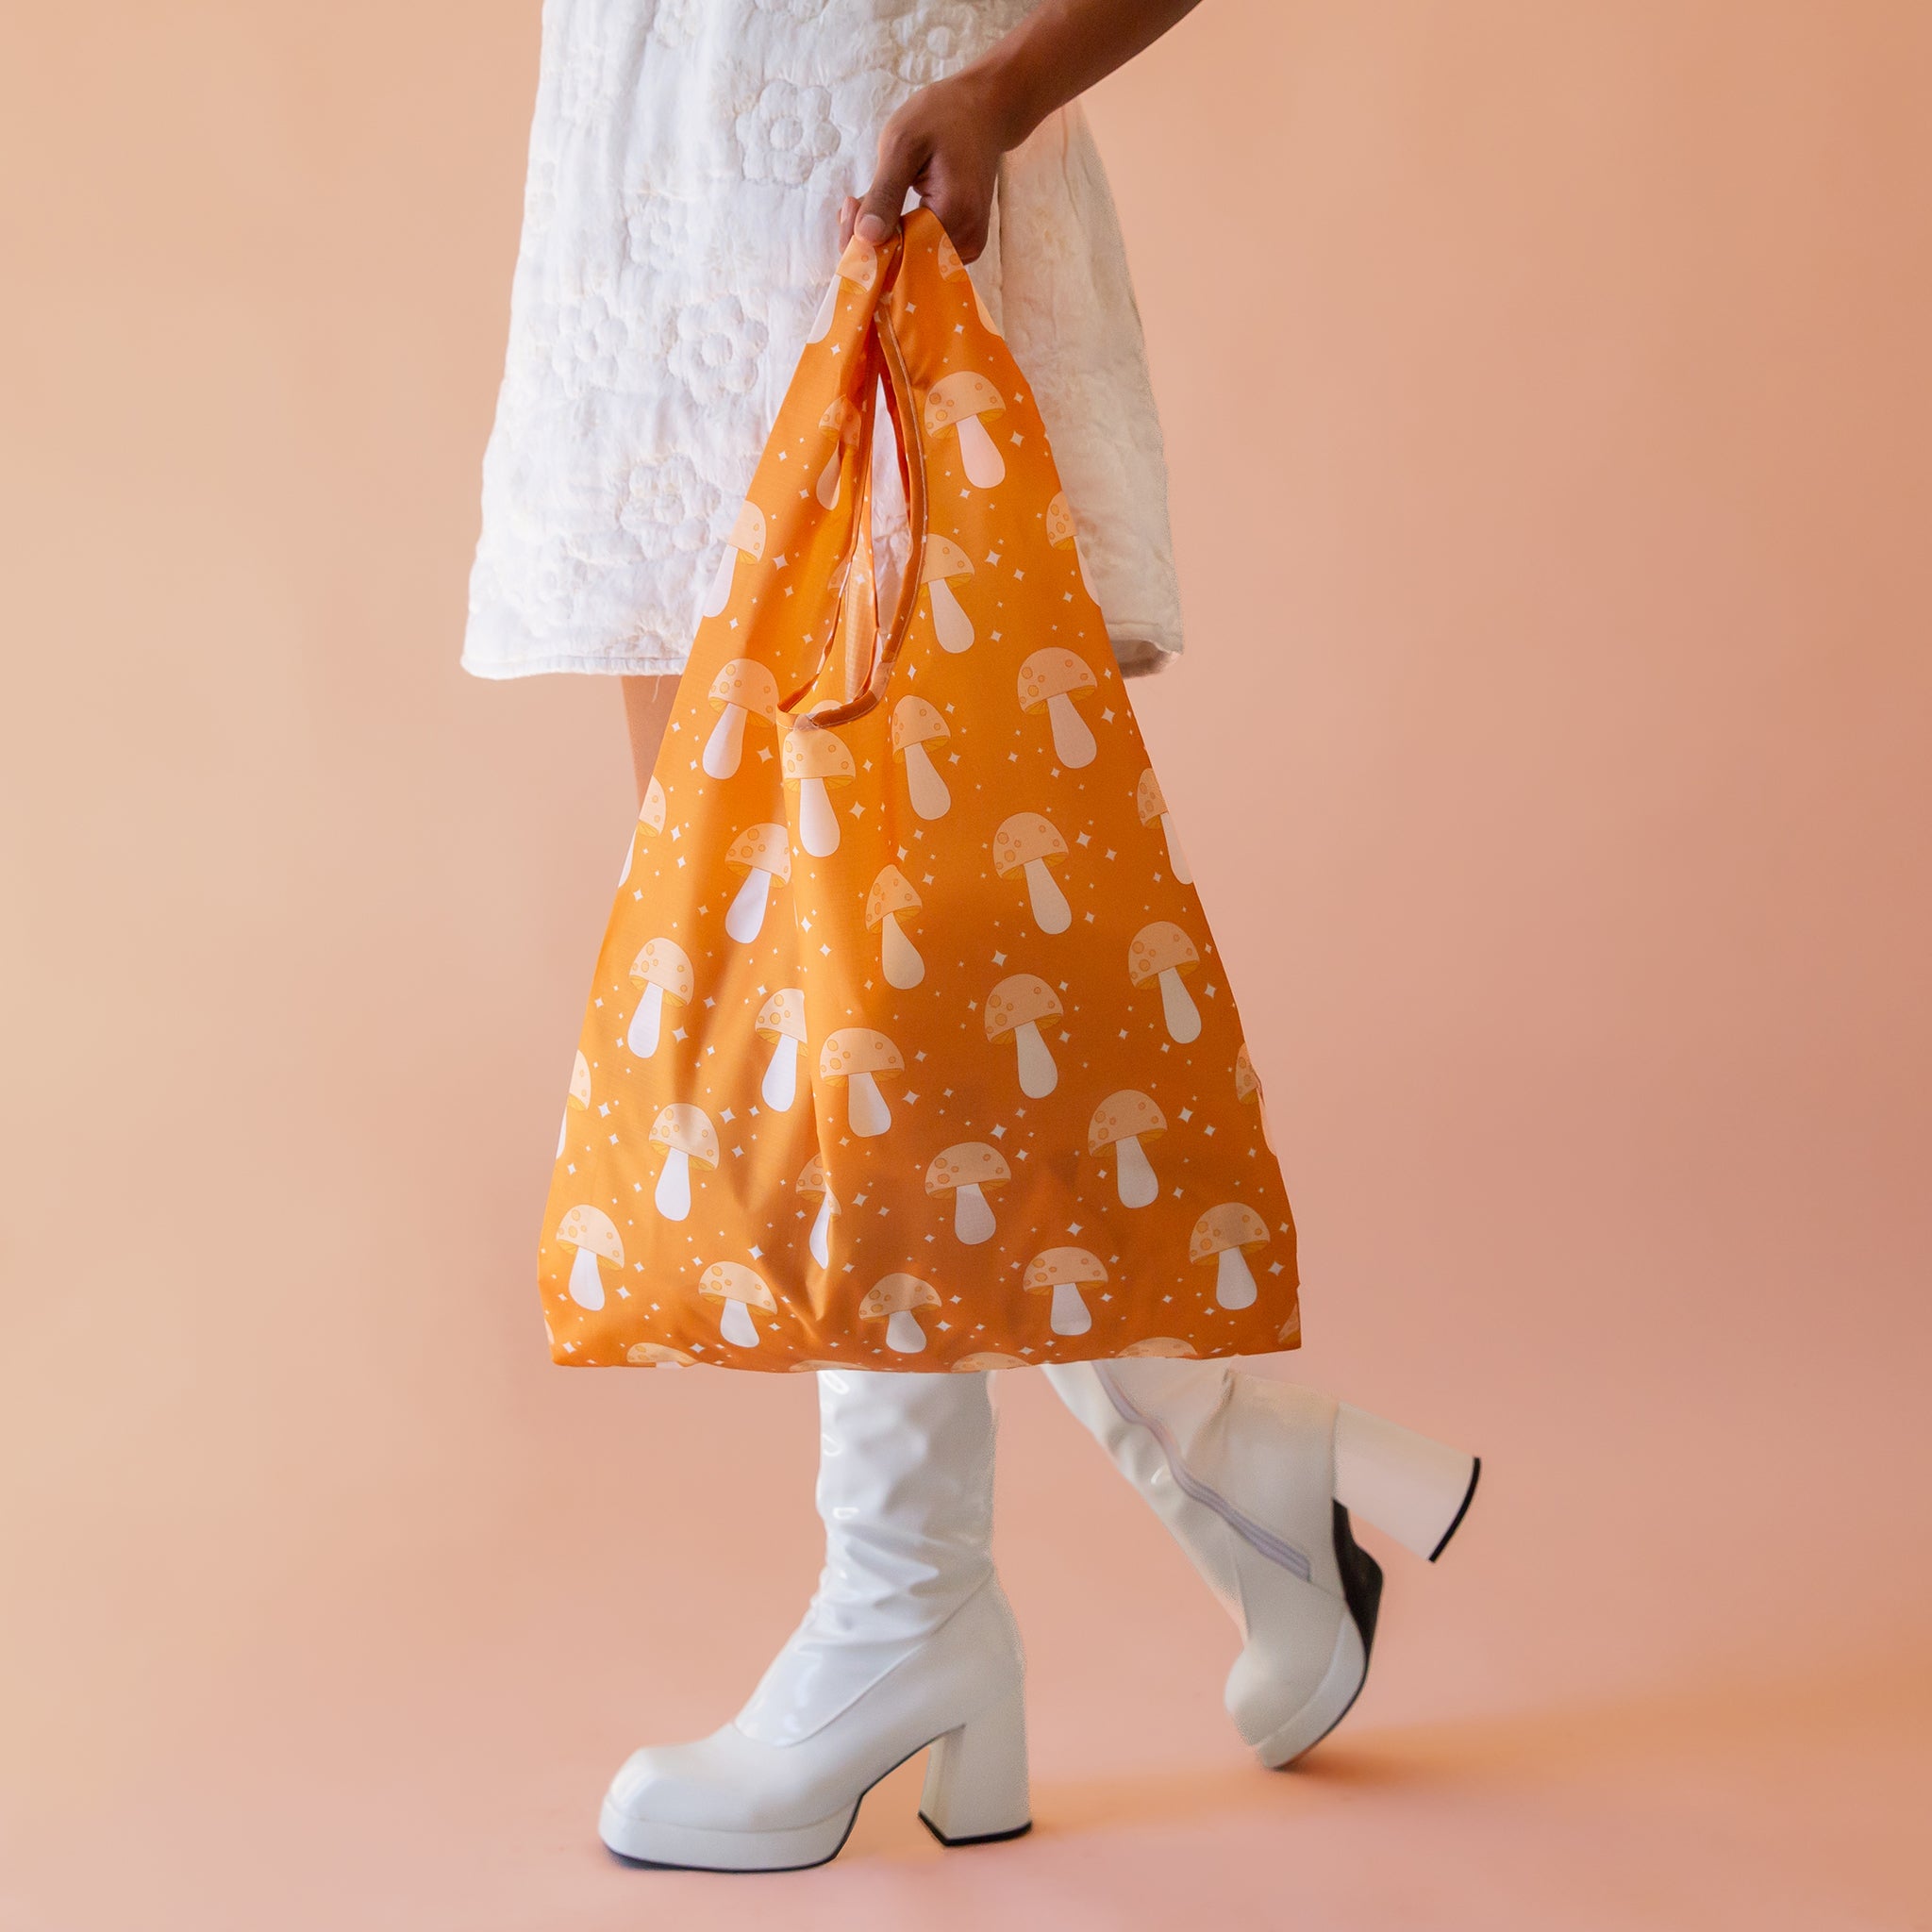 An orange nylon bag with a mushroom and twinkle star print.